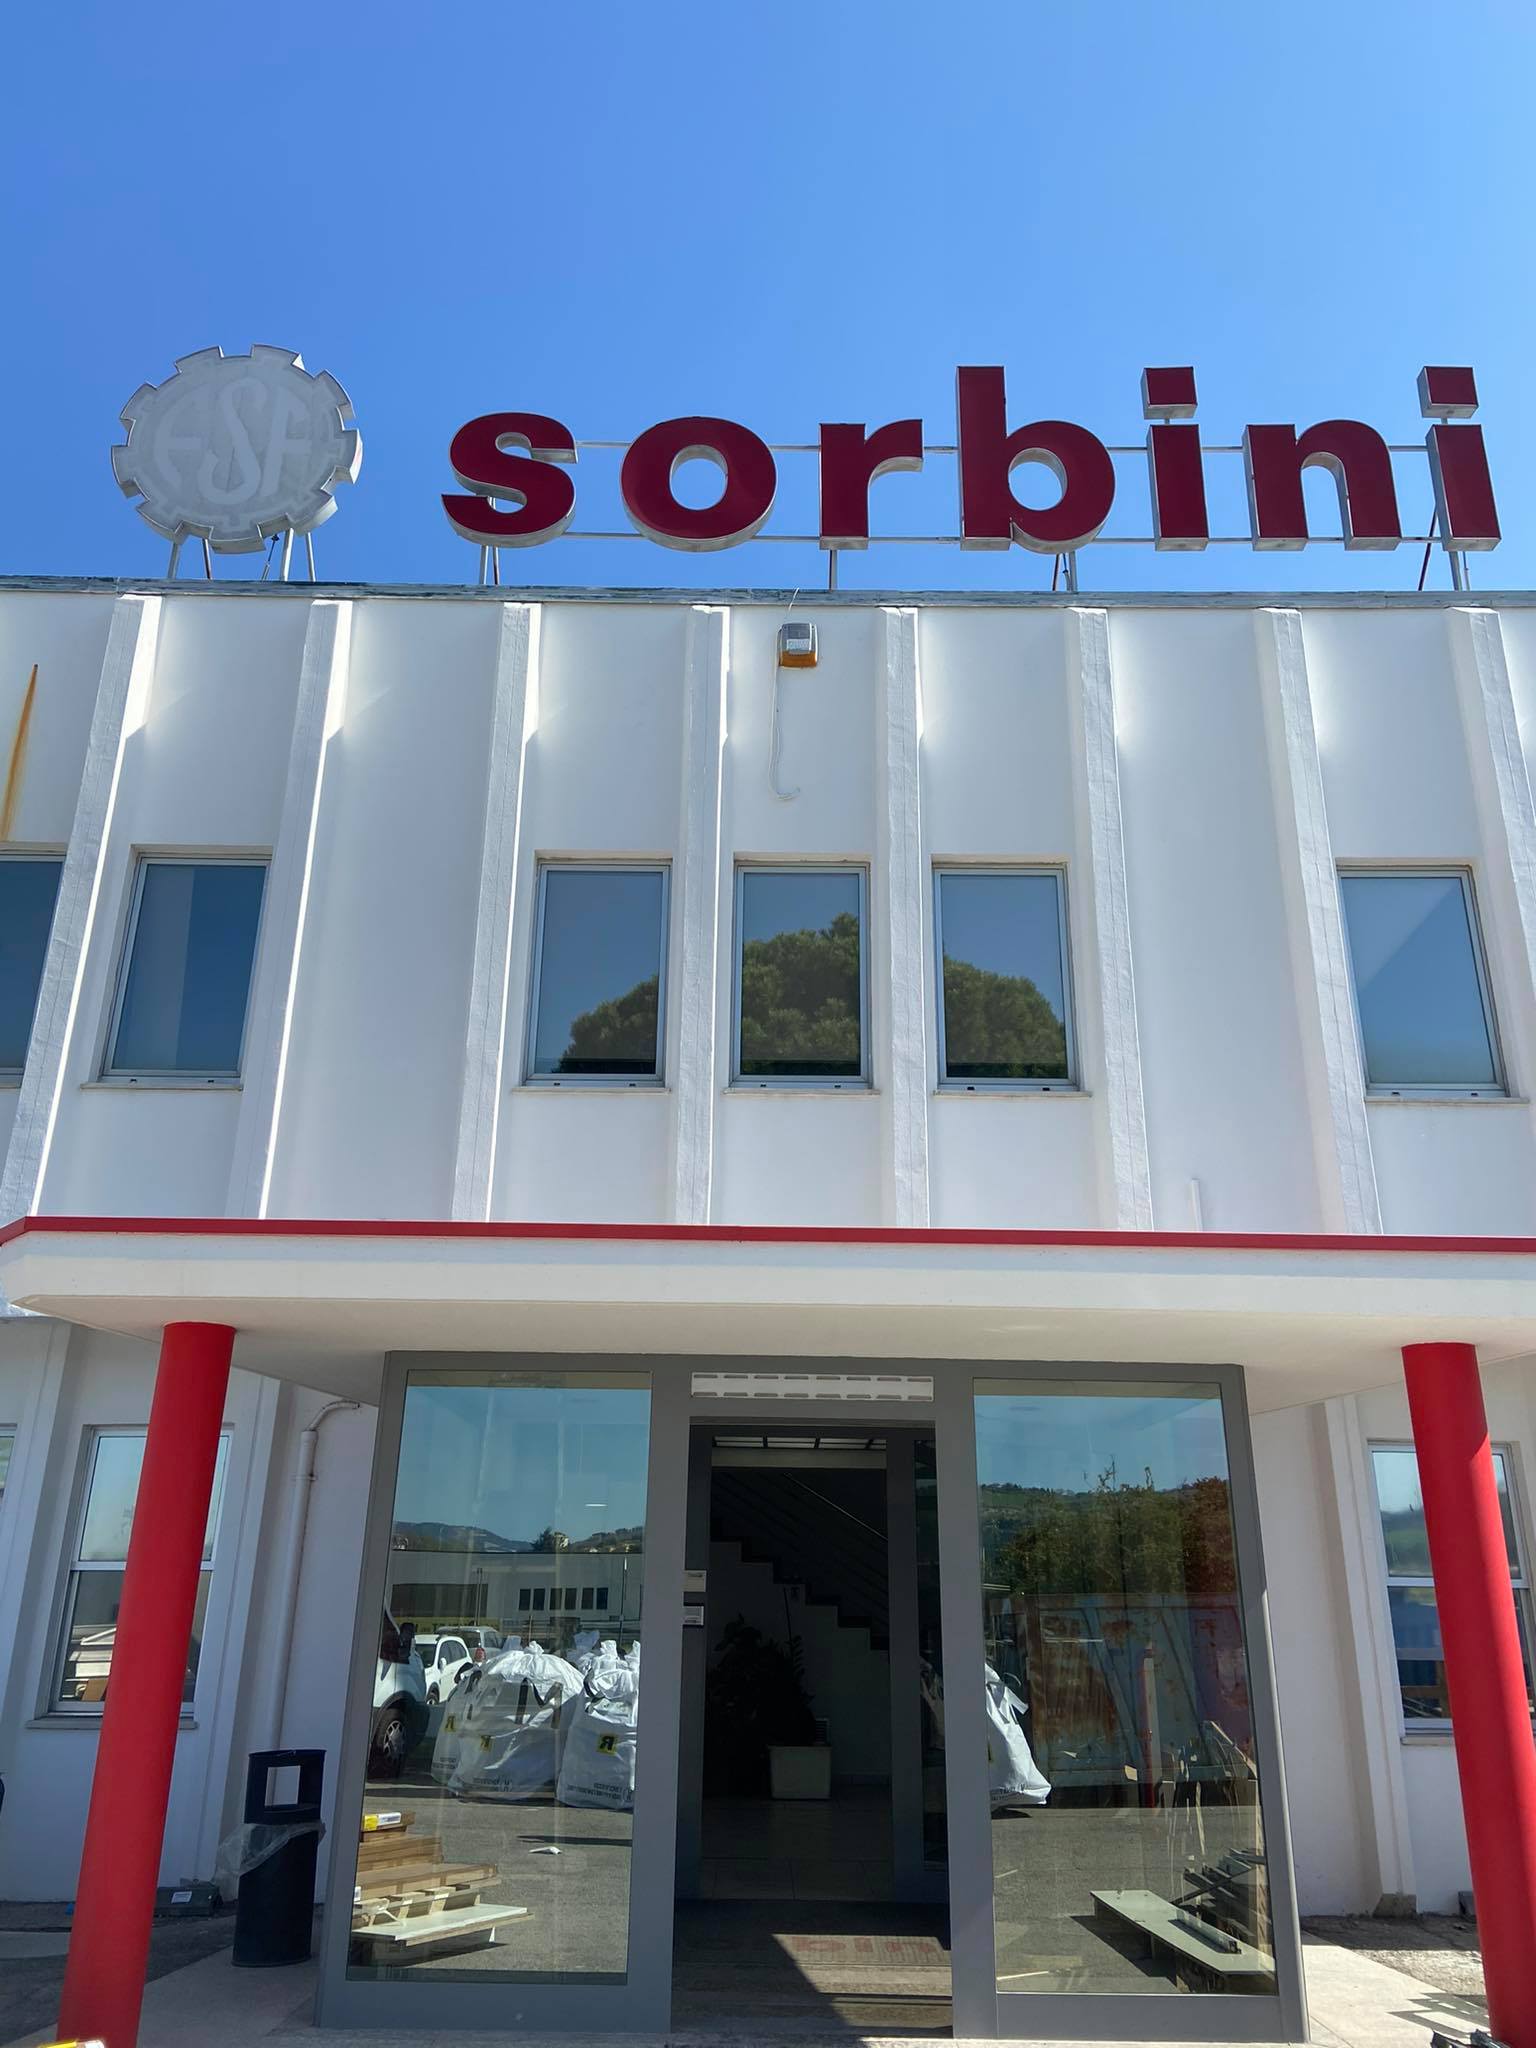 Sorbini (Cefla Group) chooses Della Rovere as its partner!